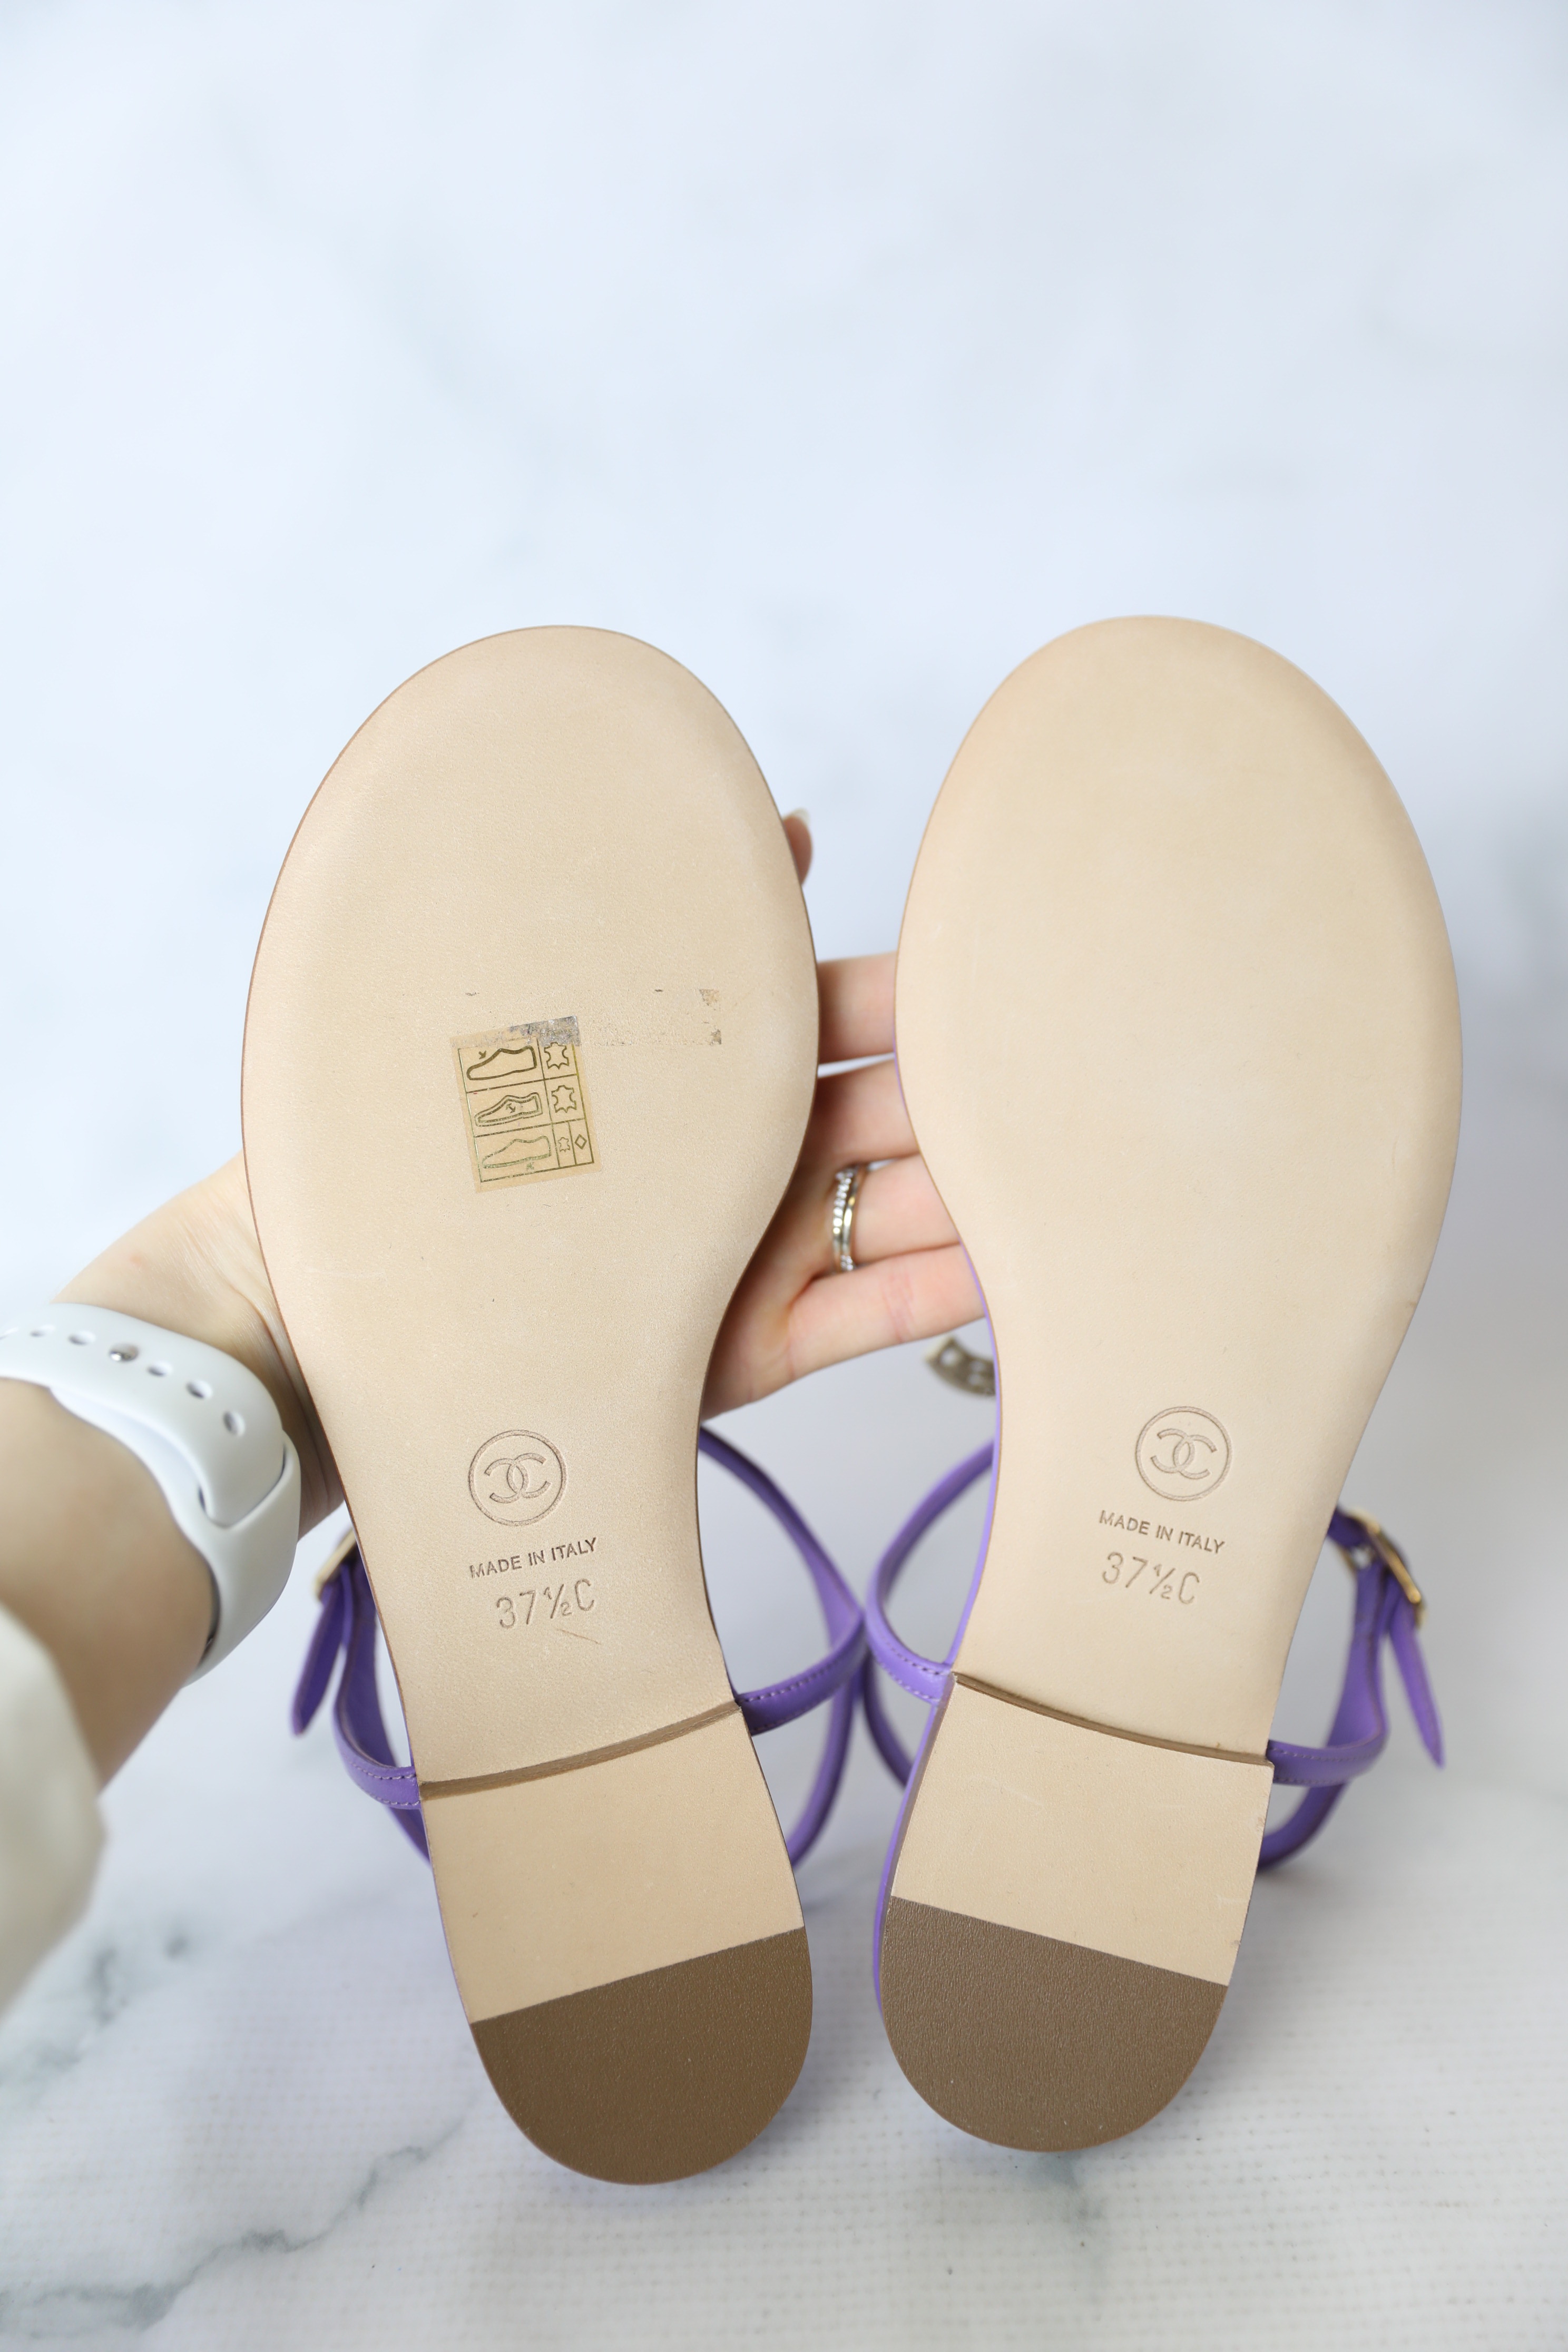 Chanel Shoes Thong Sandals, Purple, Size 37.5, New in Box WA001 - Julia  Rose Boston